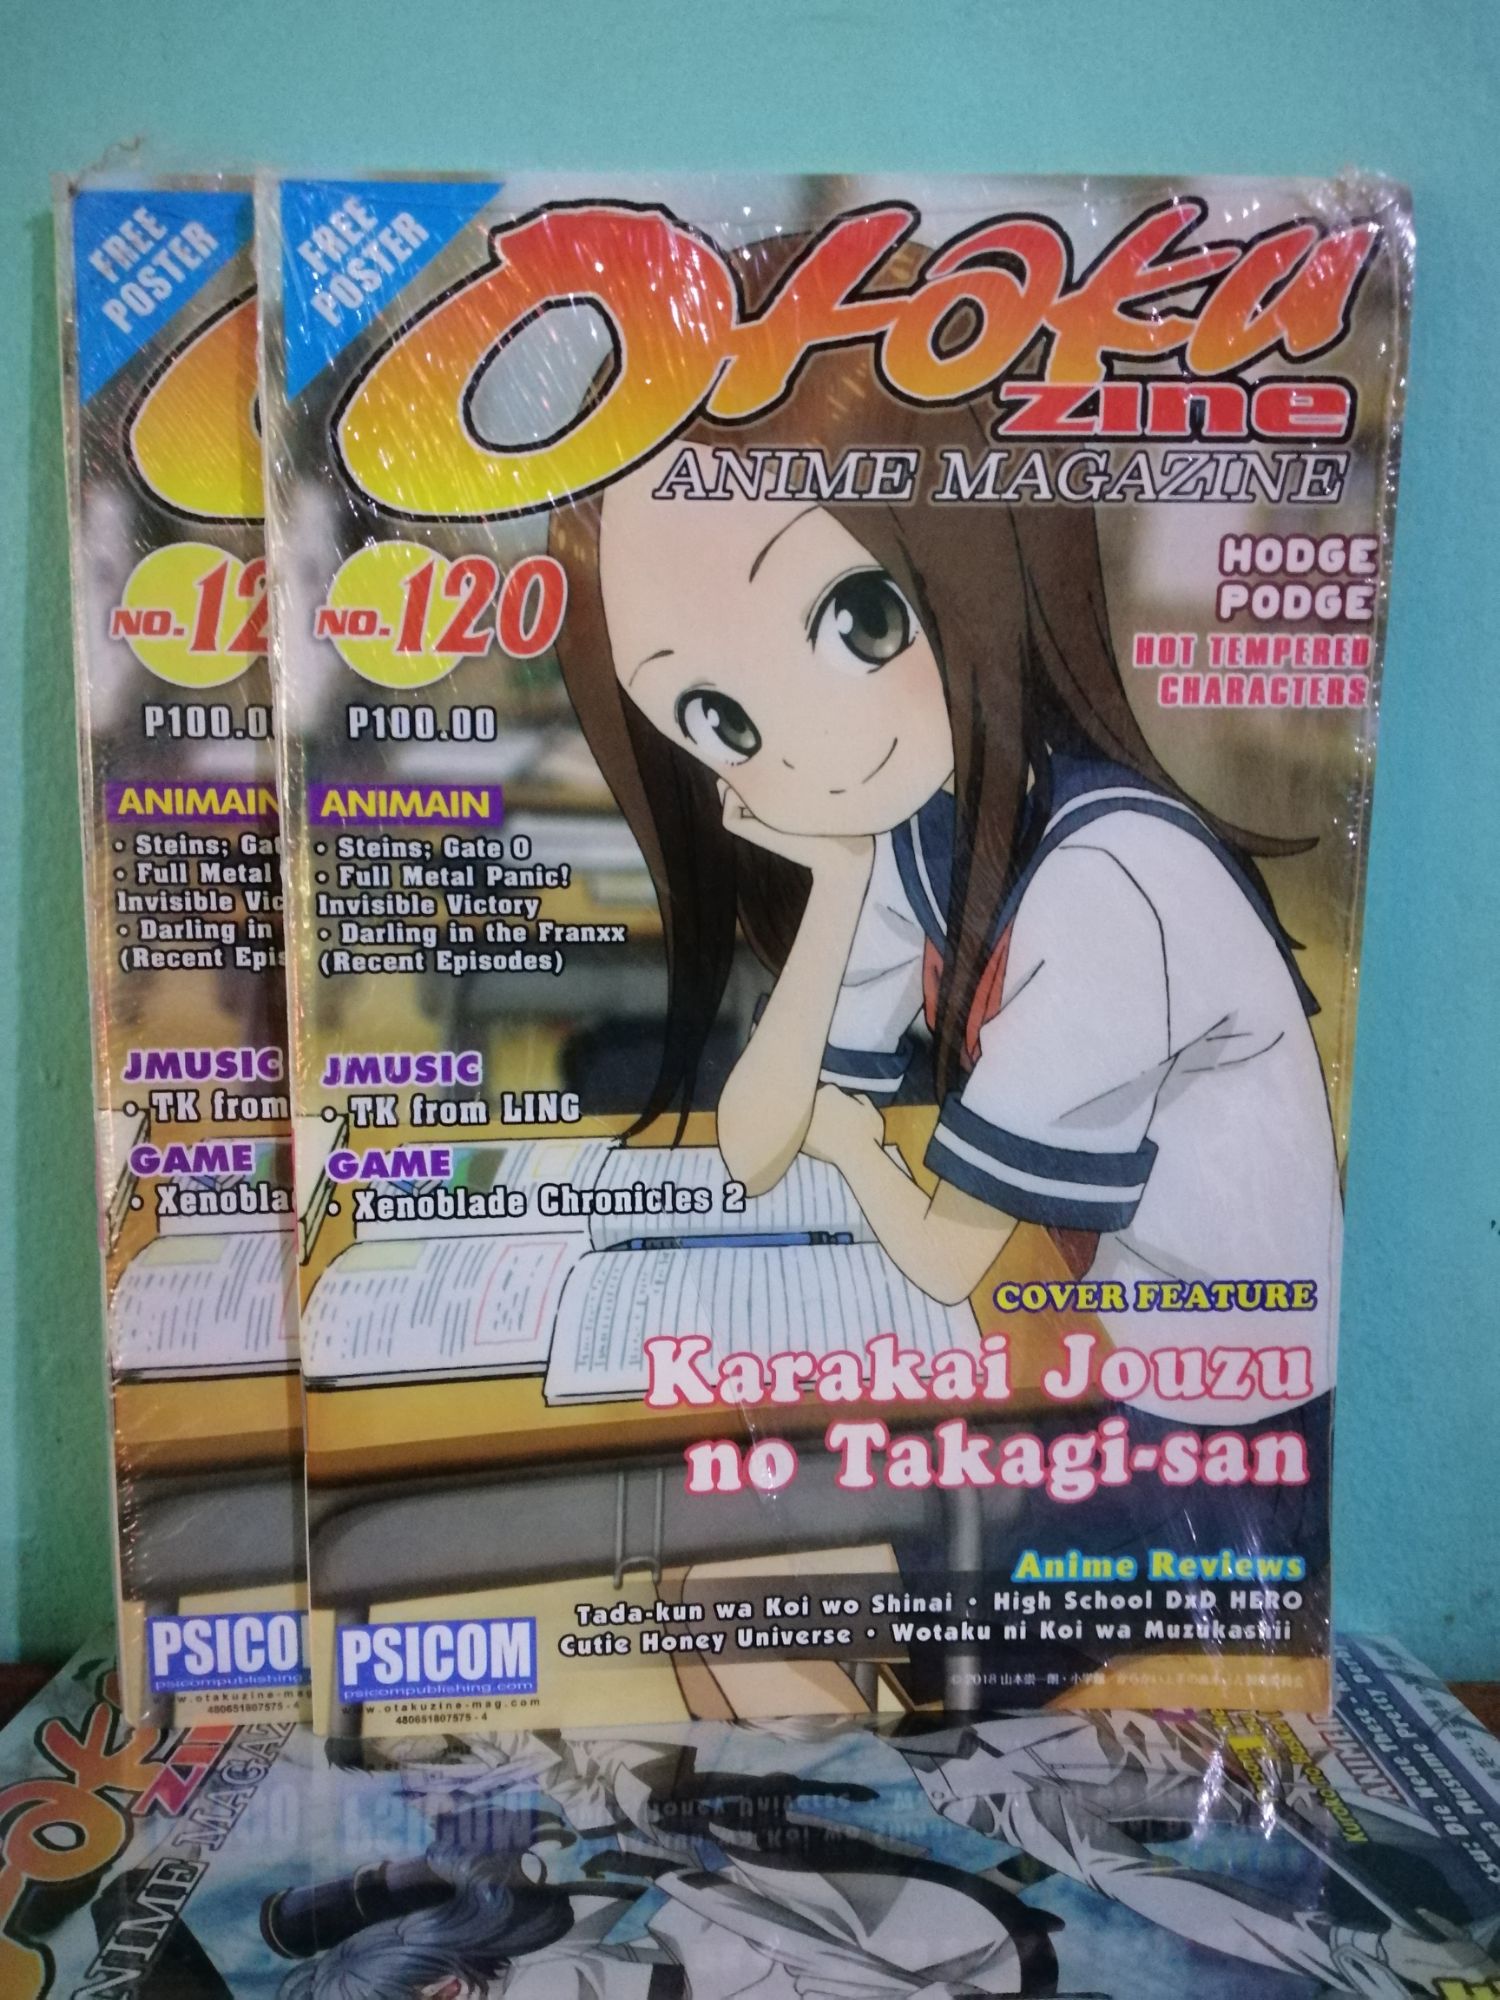 Preloved Otaku Zine Anime Magazine w/ Poster #1 | Shopee Philippines